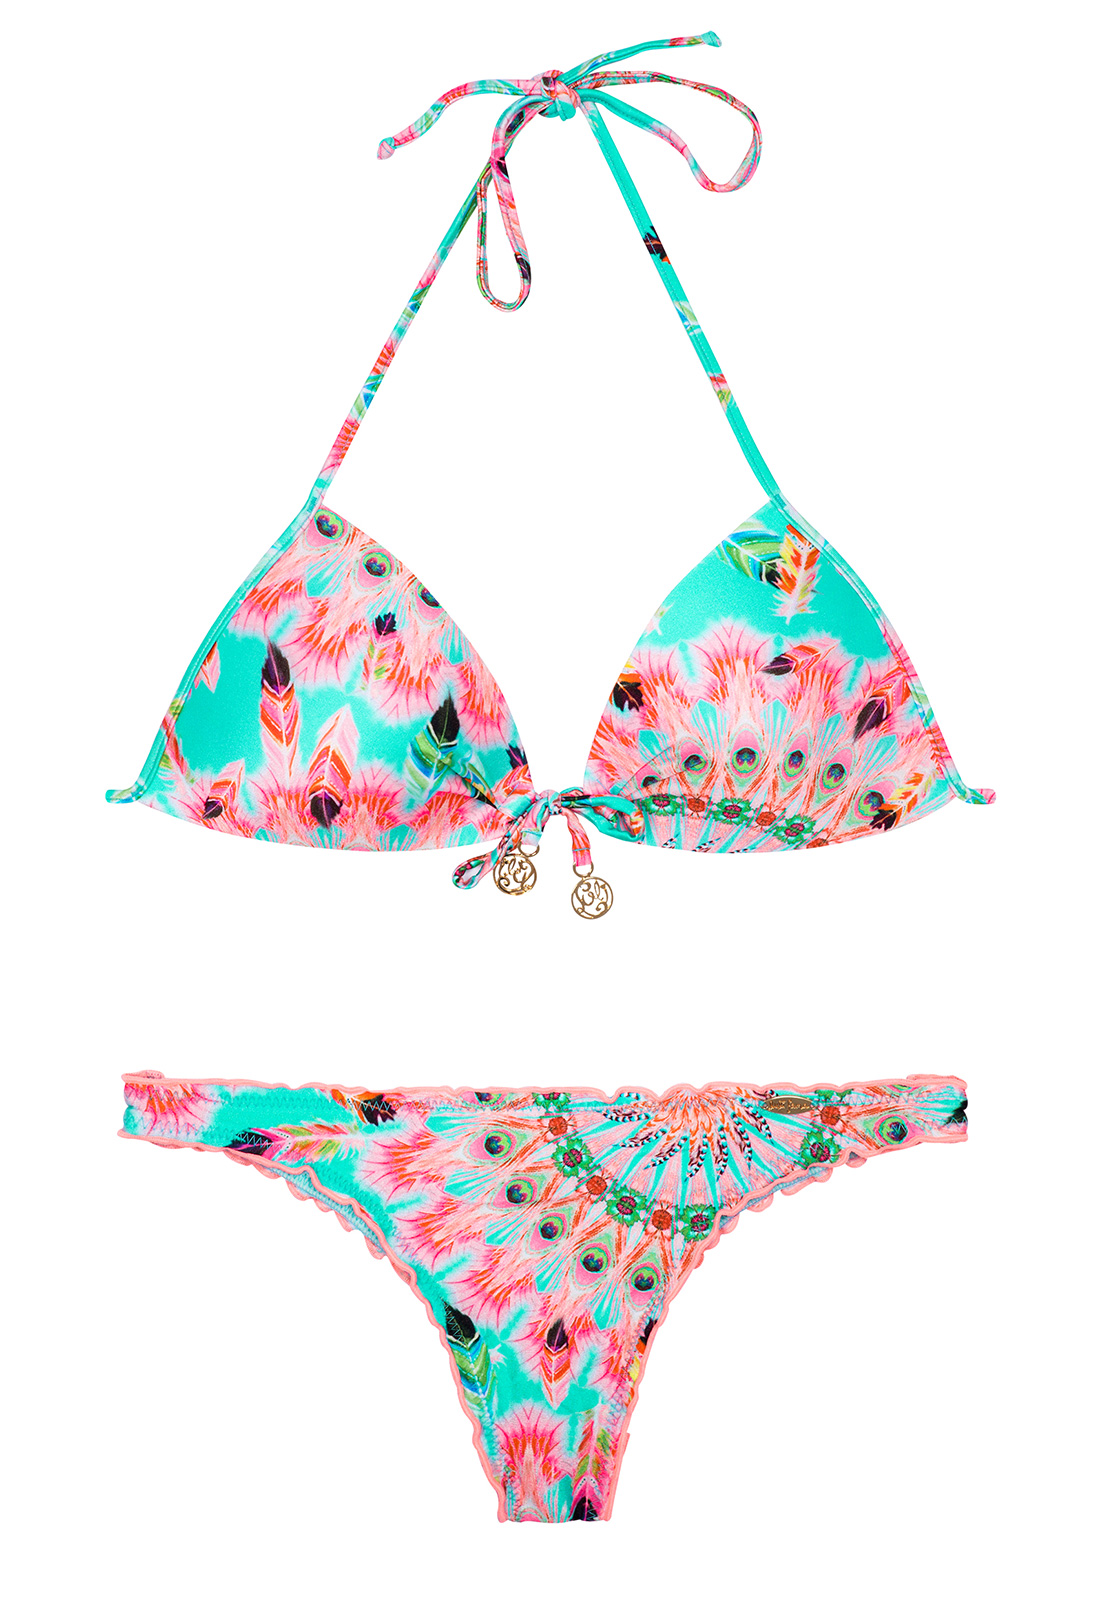 Luli Fama Pastel Pink And Green Push-up Top Bikini Set - Dreamcatcher